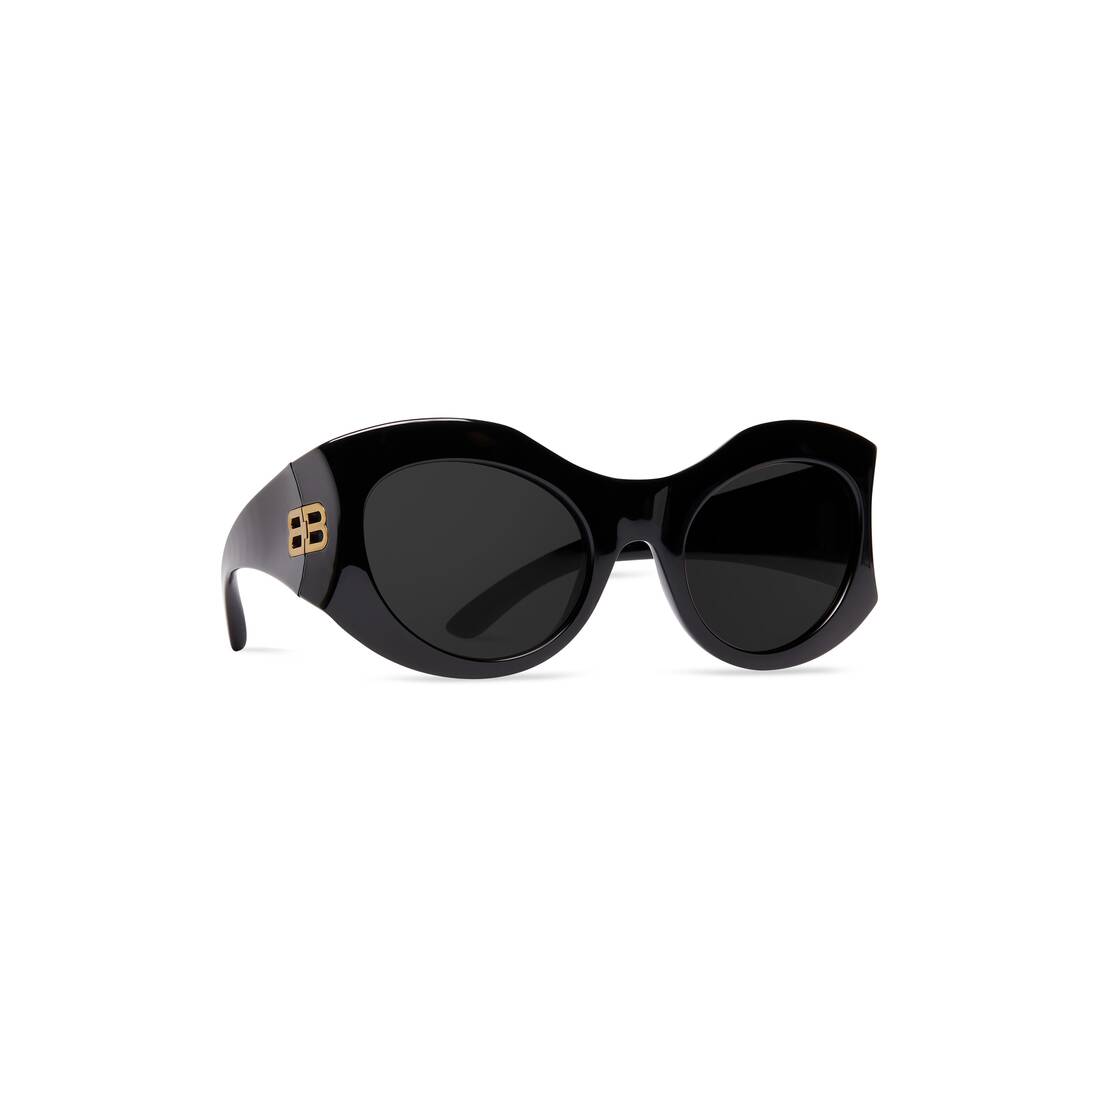 Hourglass Round Sunglasses in Black